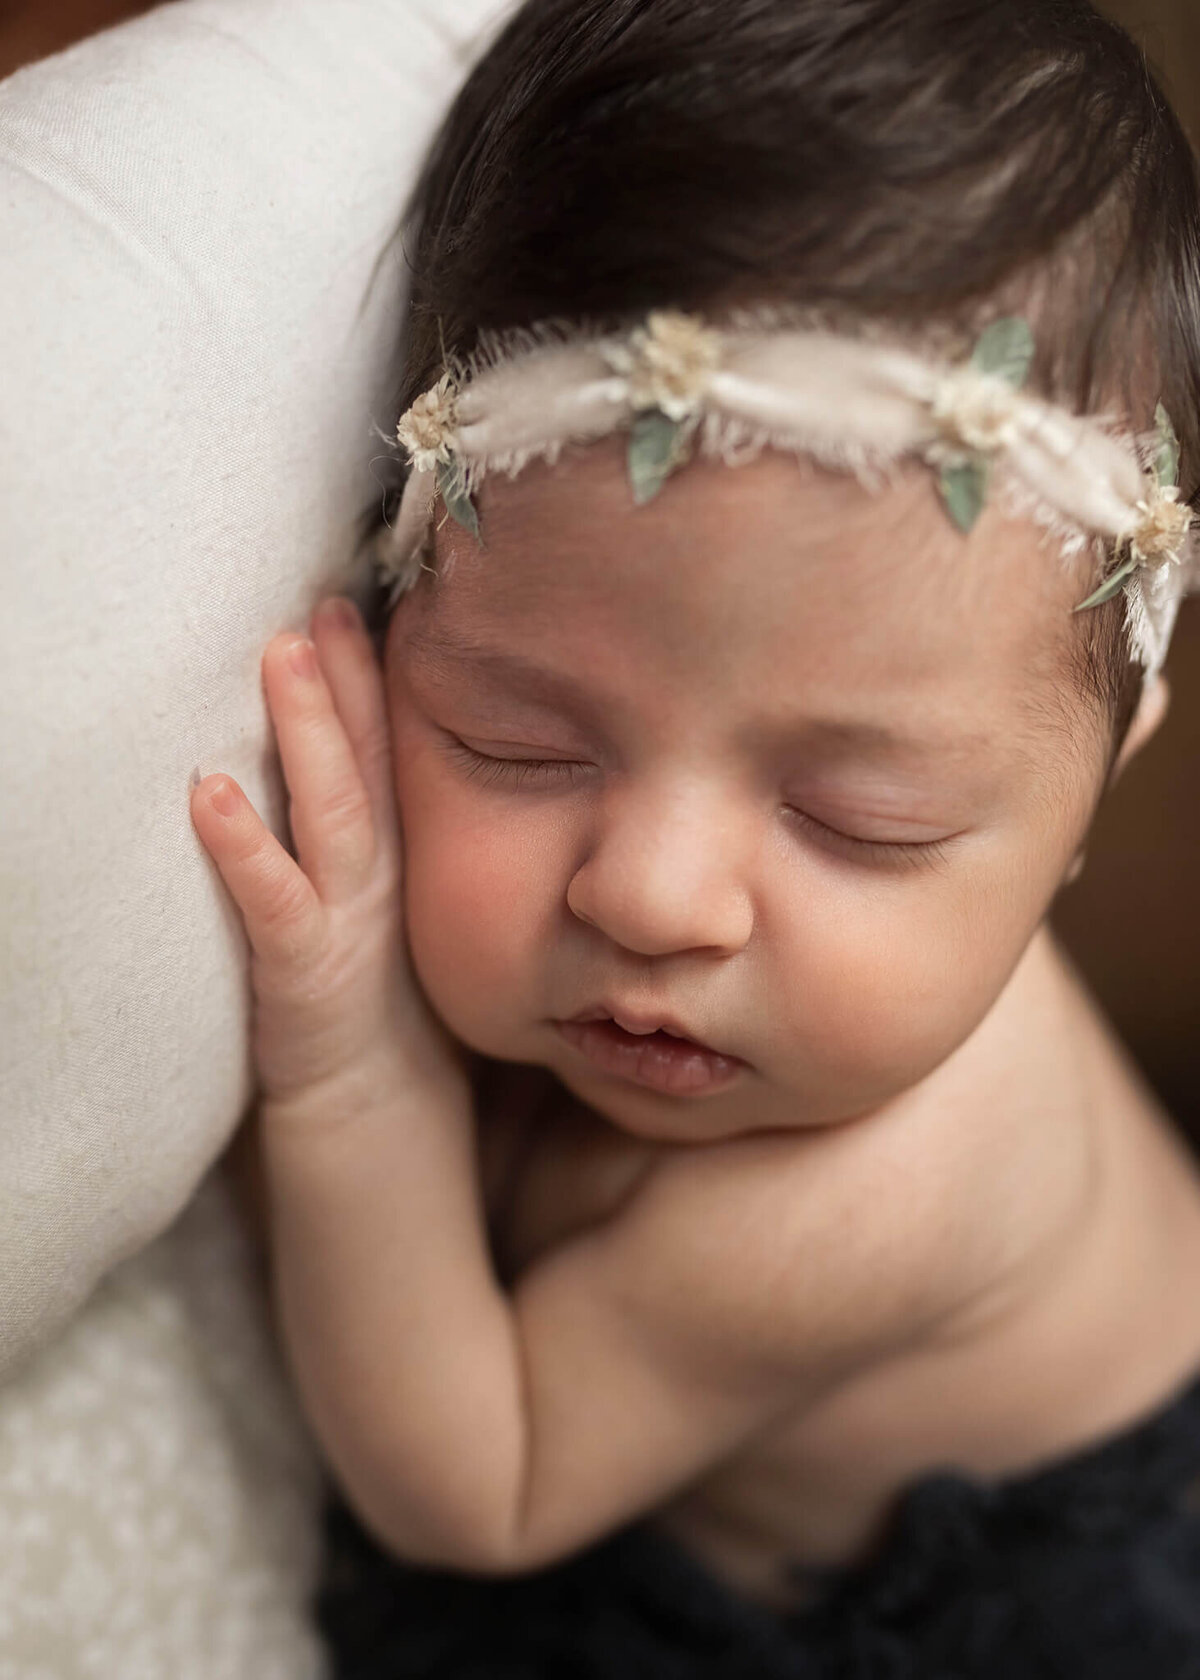 NJ baby photographer captures newborn on bed